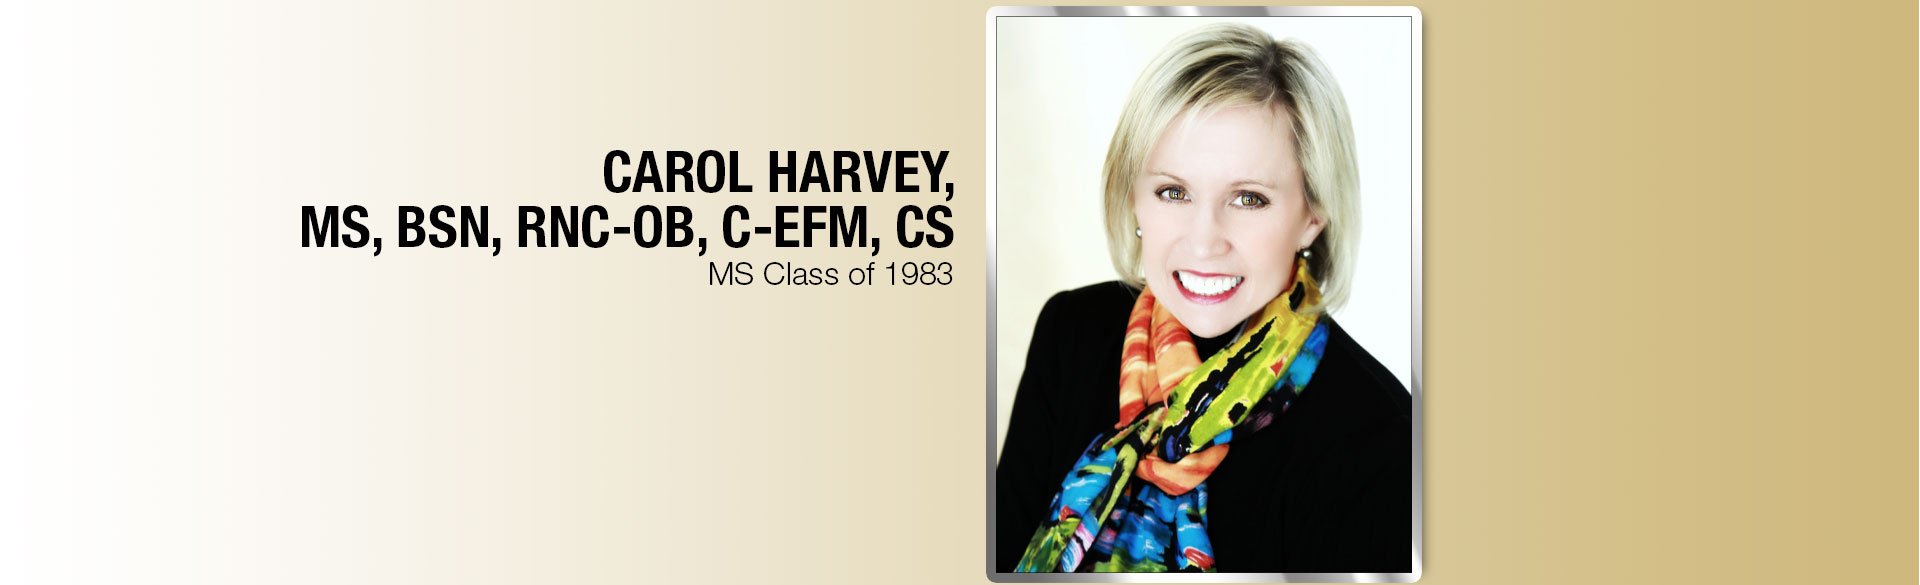 CU College of Nursing Alumni Carol Harvey